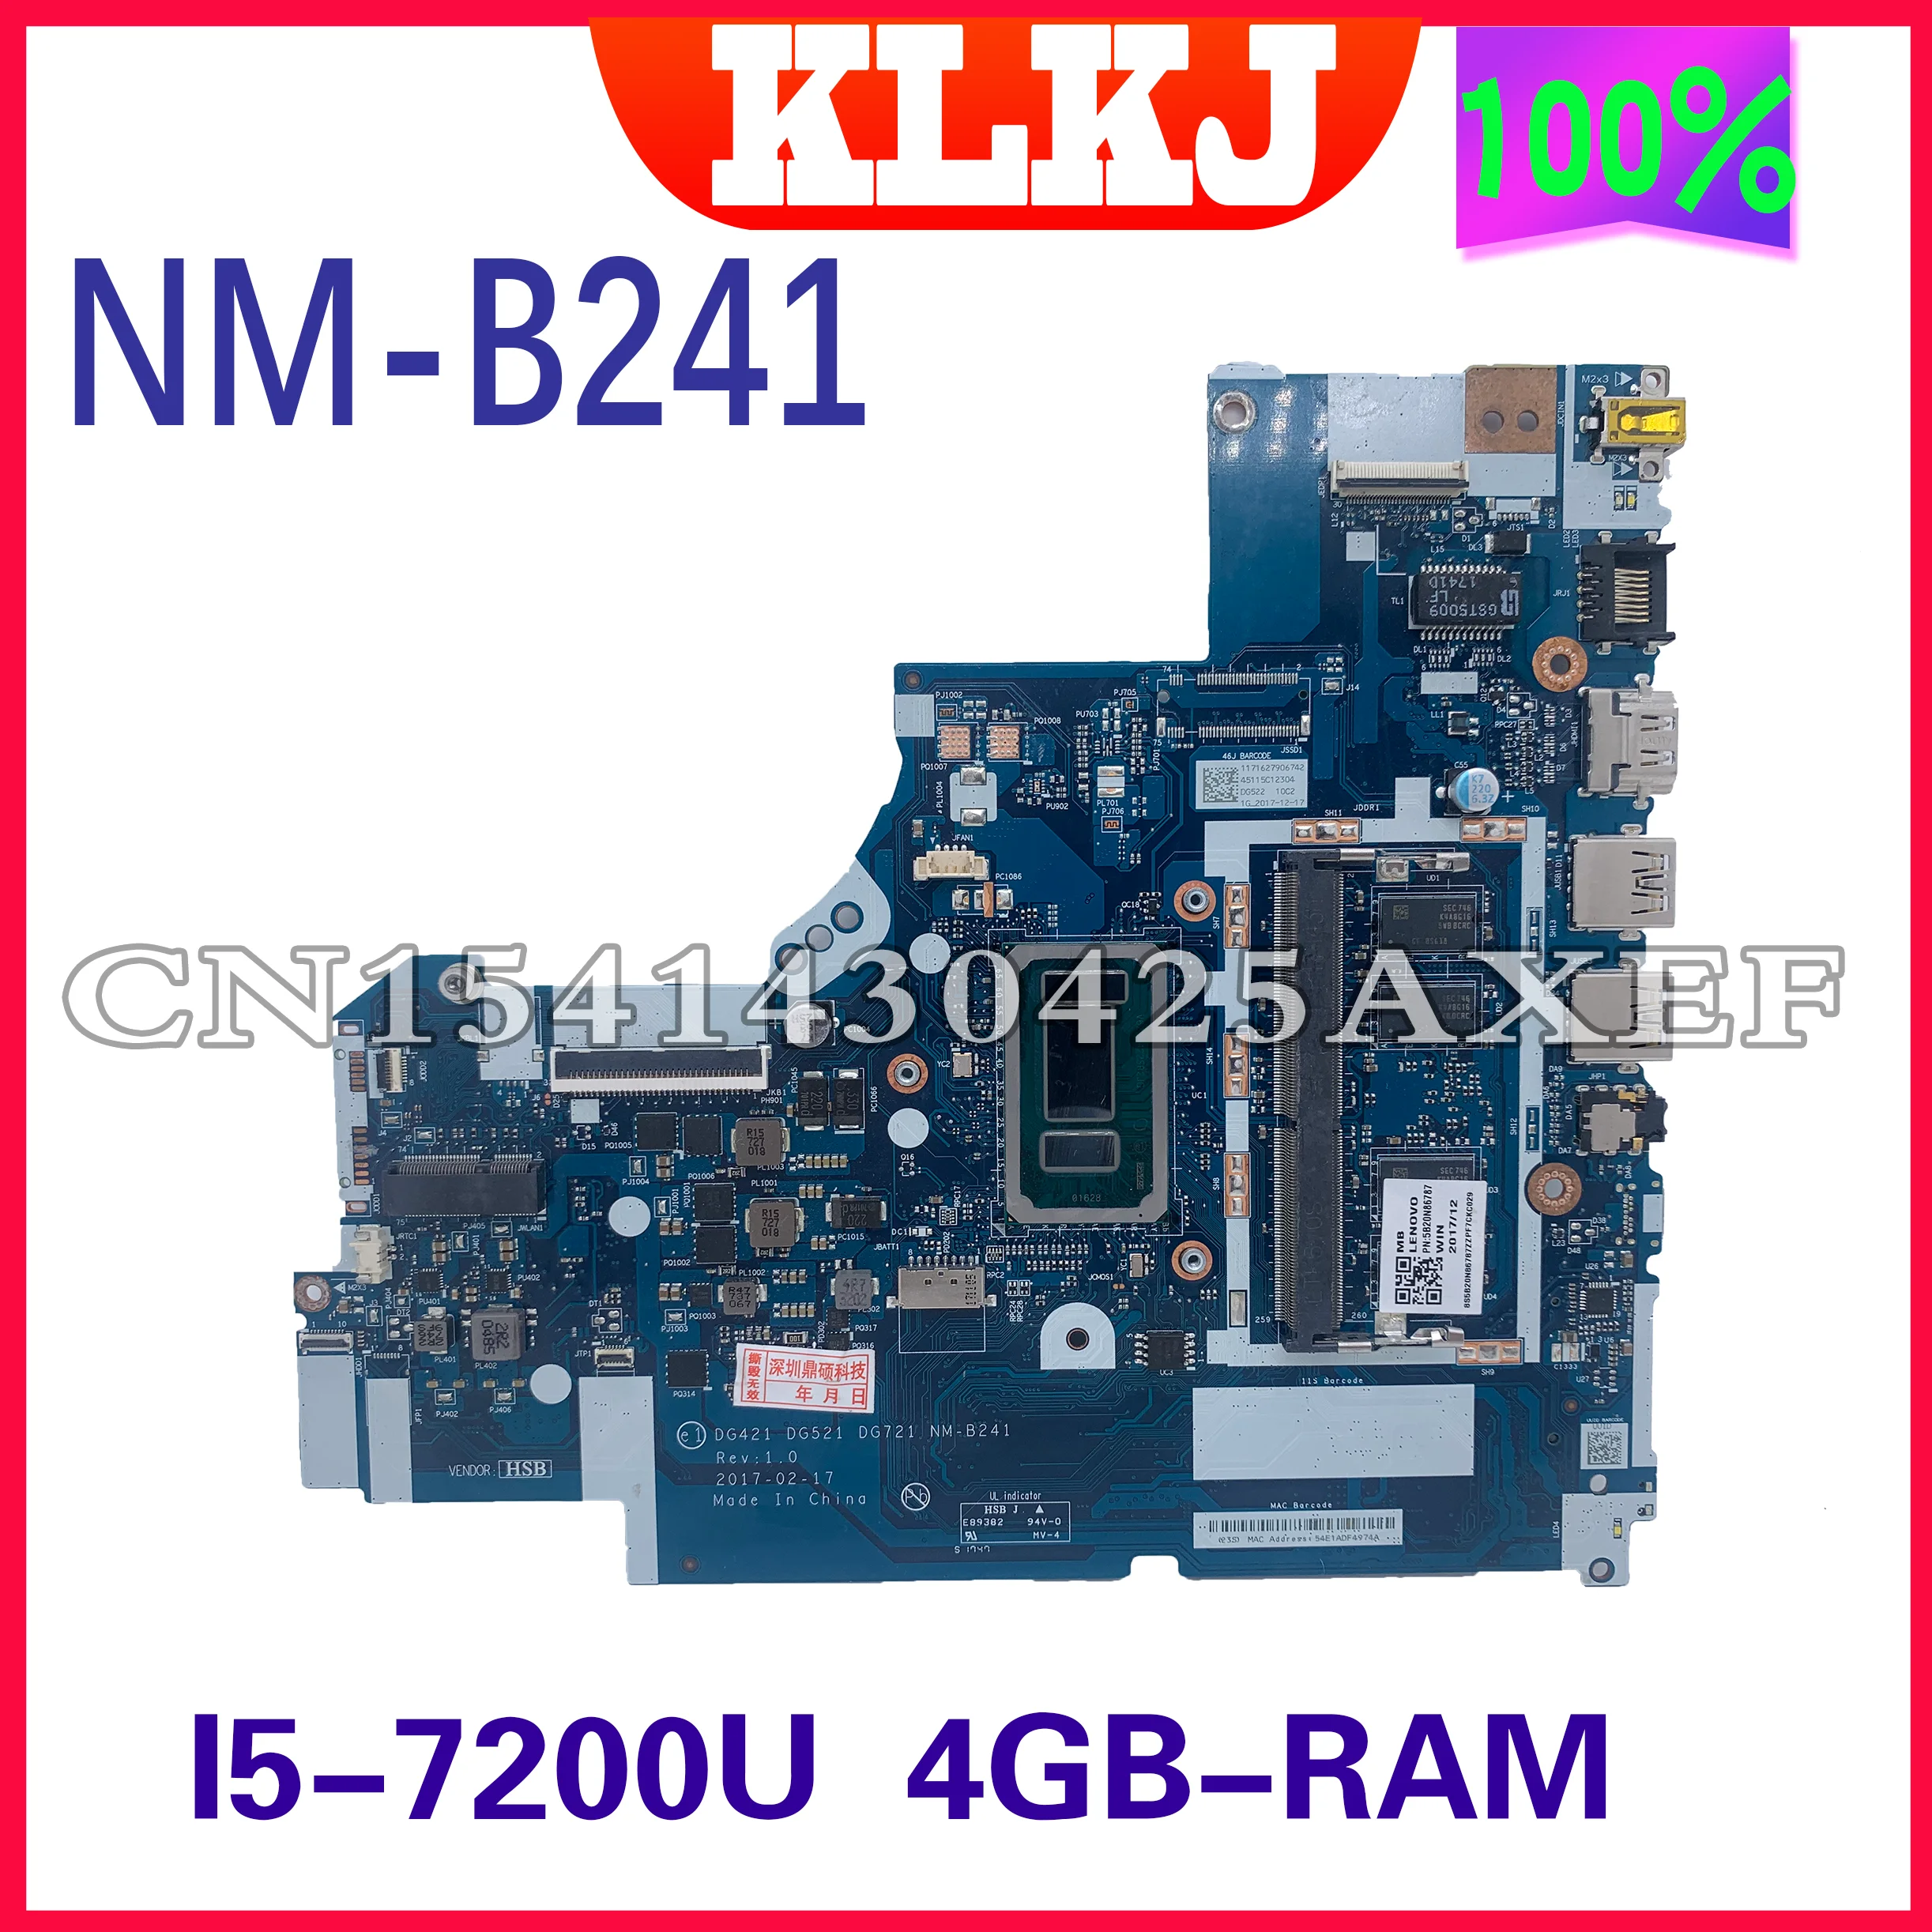 

KLKJ NM-B241 Laptop Motherboard For Lenovo Ideapad 320-15IKB 320-15ISK Original Mainboard 4GB-RAM I5-7200U GM